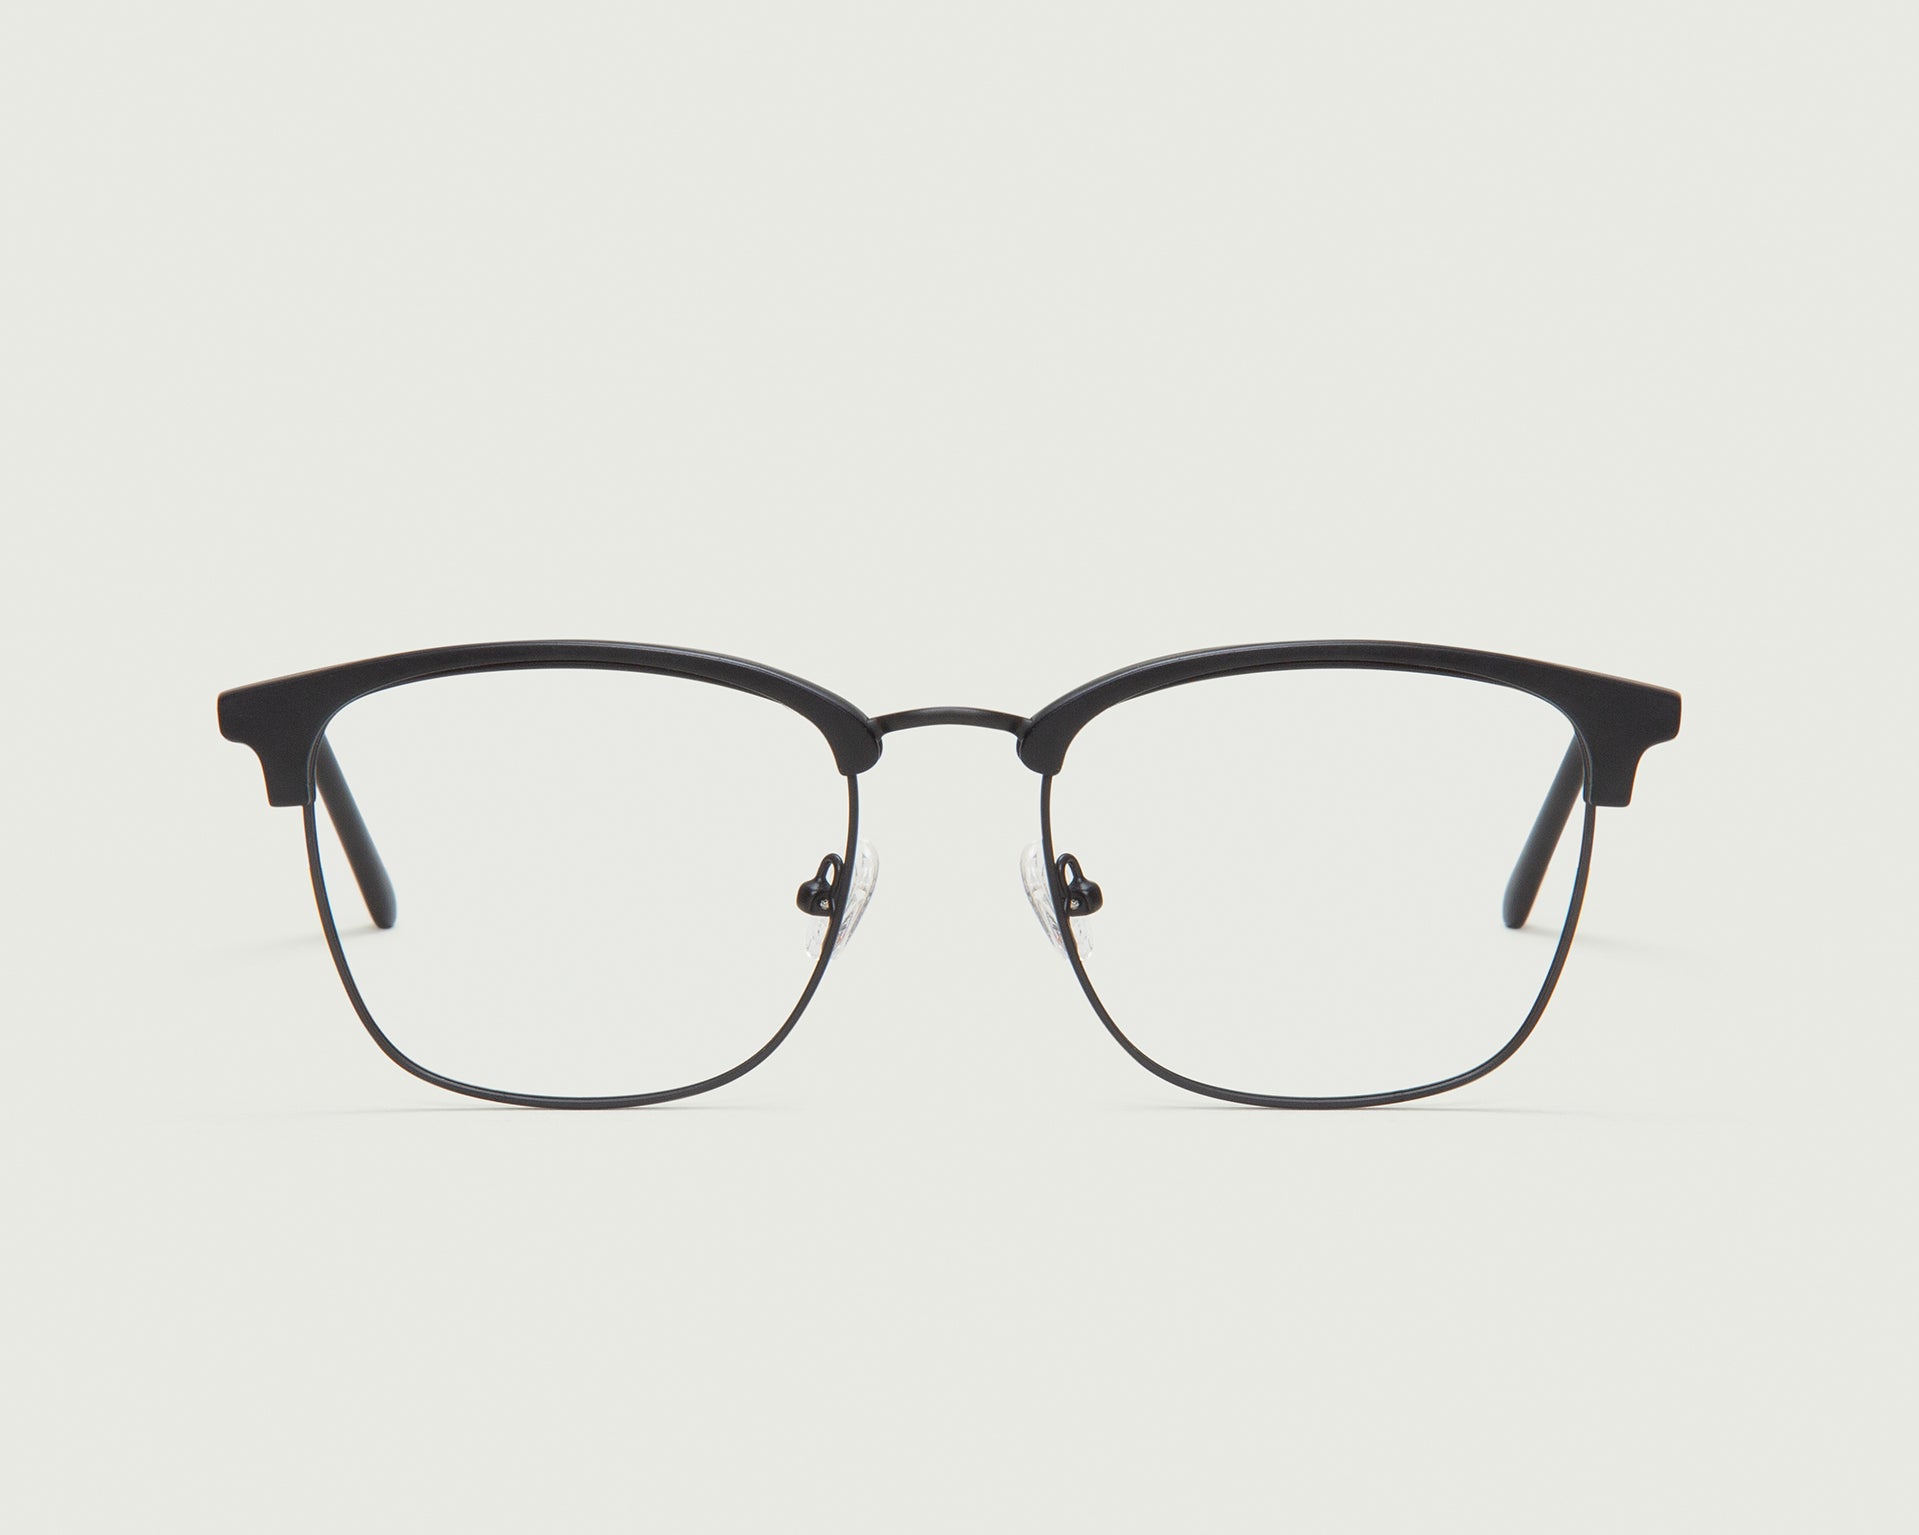 Charcoal::Nash Eyeglasses browline black plastic front